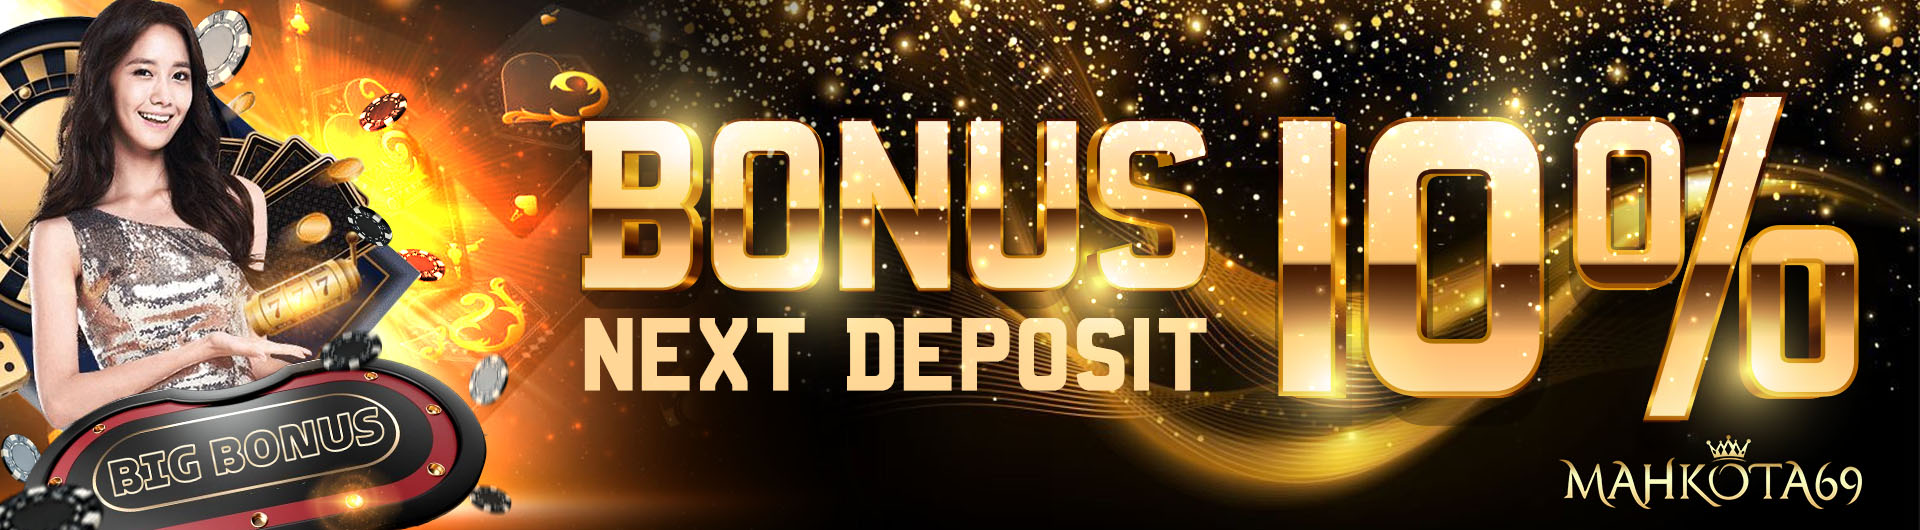 Bonus Next Deposit Slot terpercaya Mahkota69